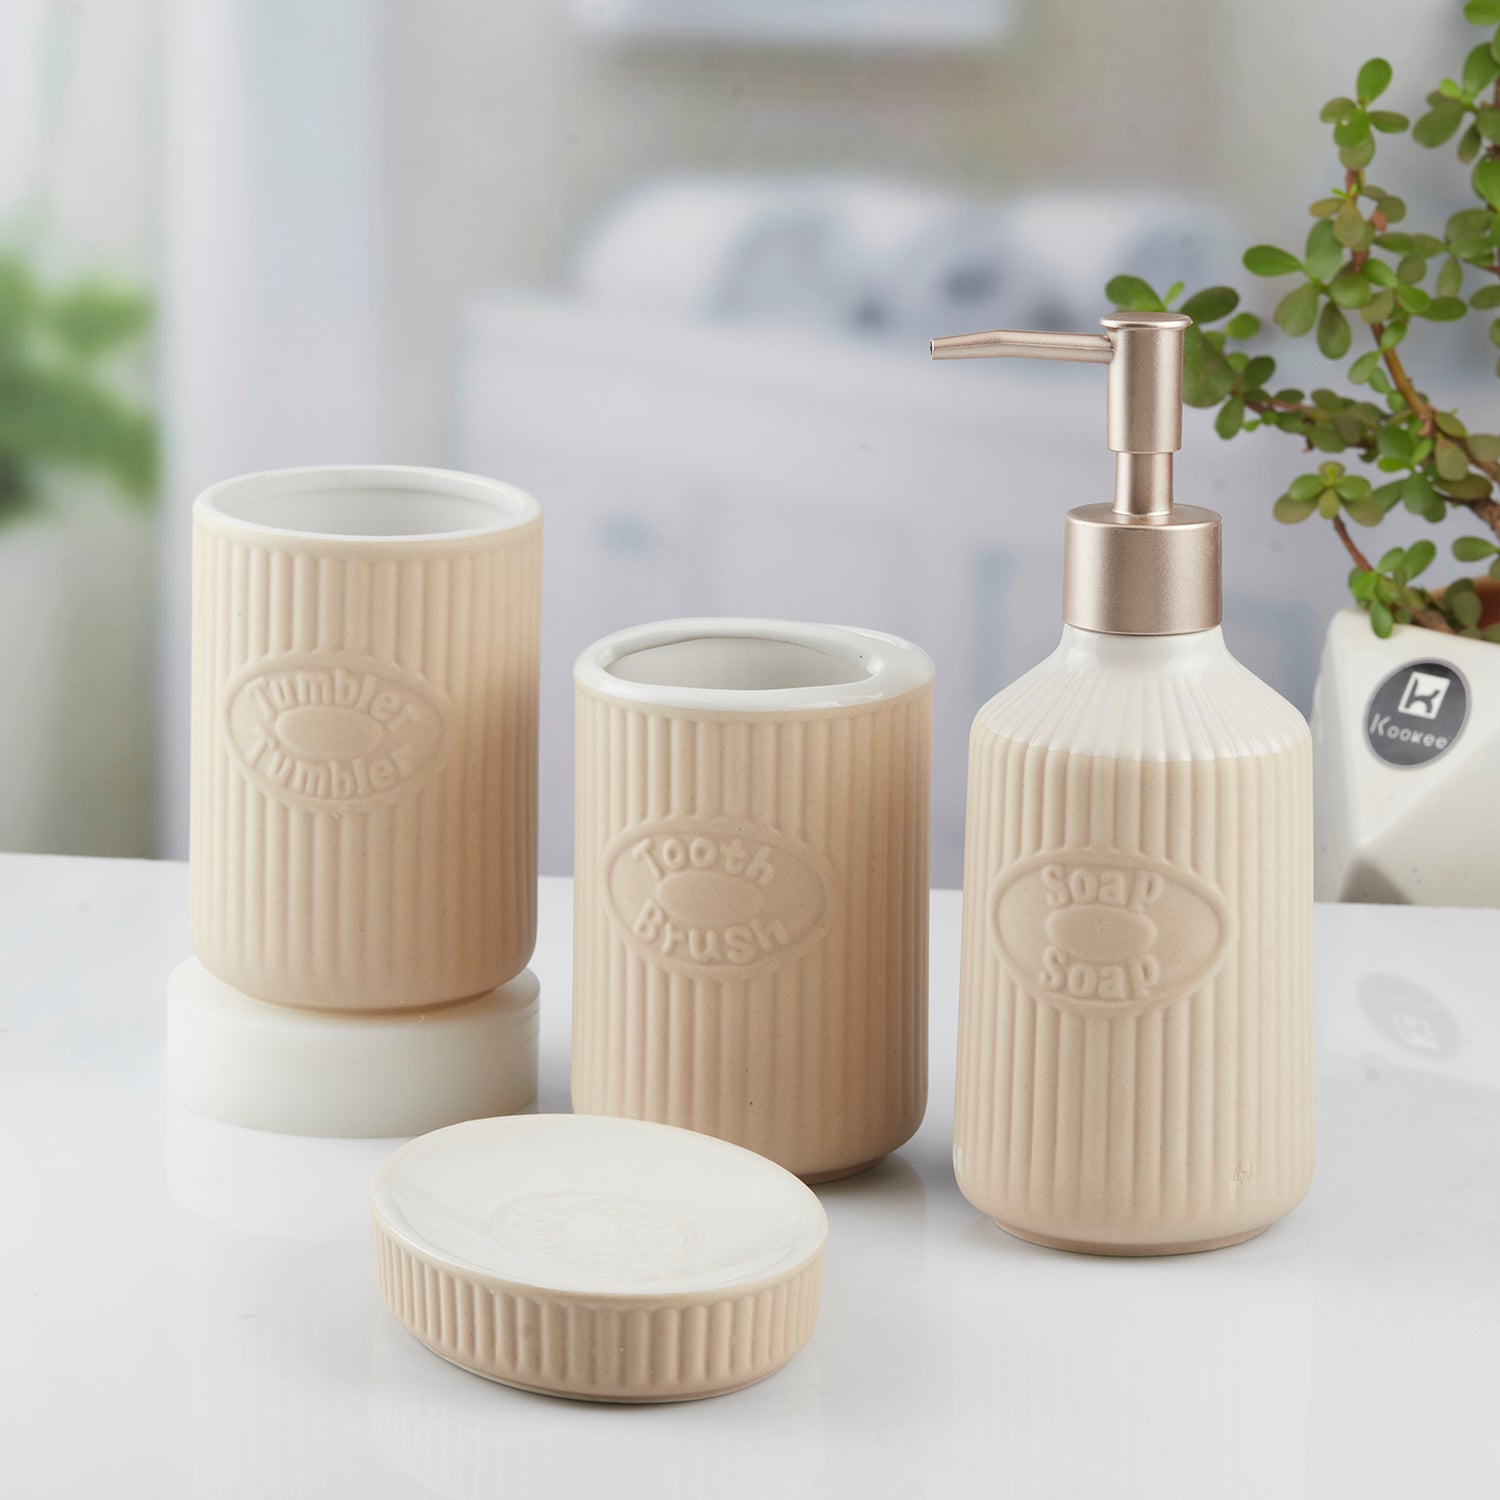 Ceramic Bathroom Accessories Set of 4 Bath Set with Soap Dispenser (8236)